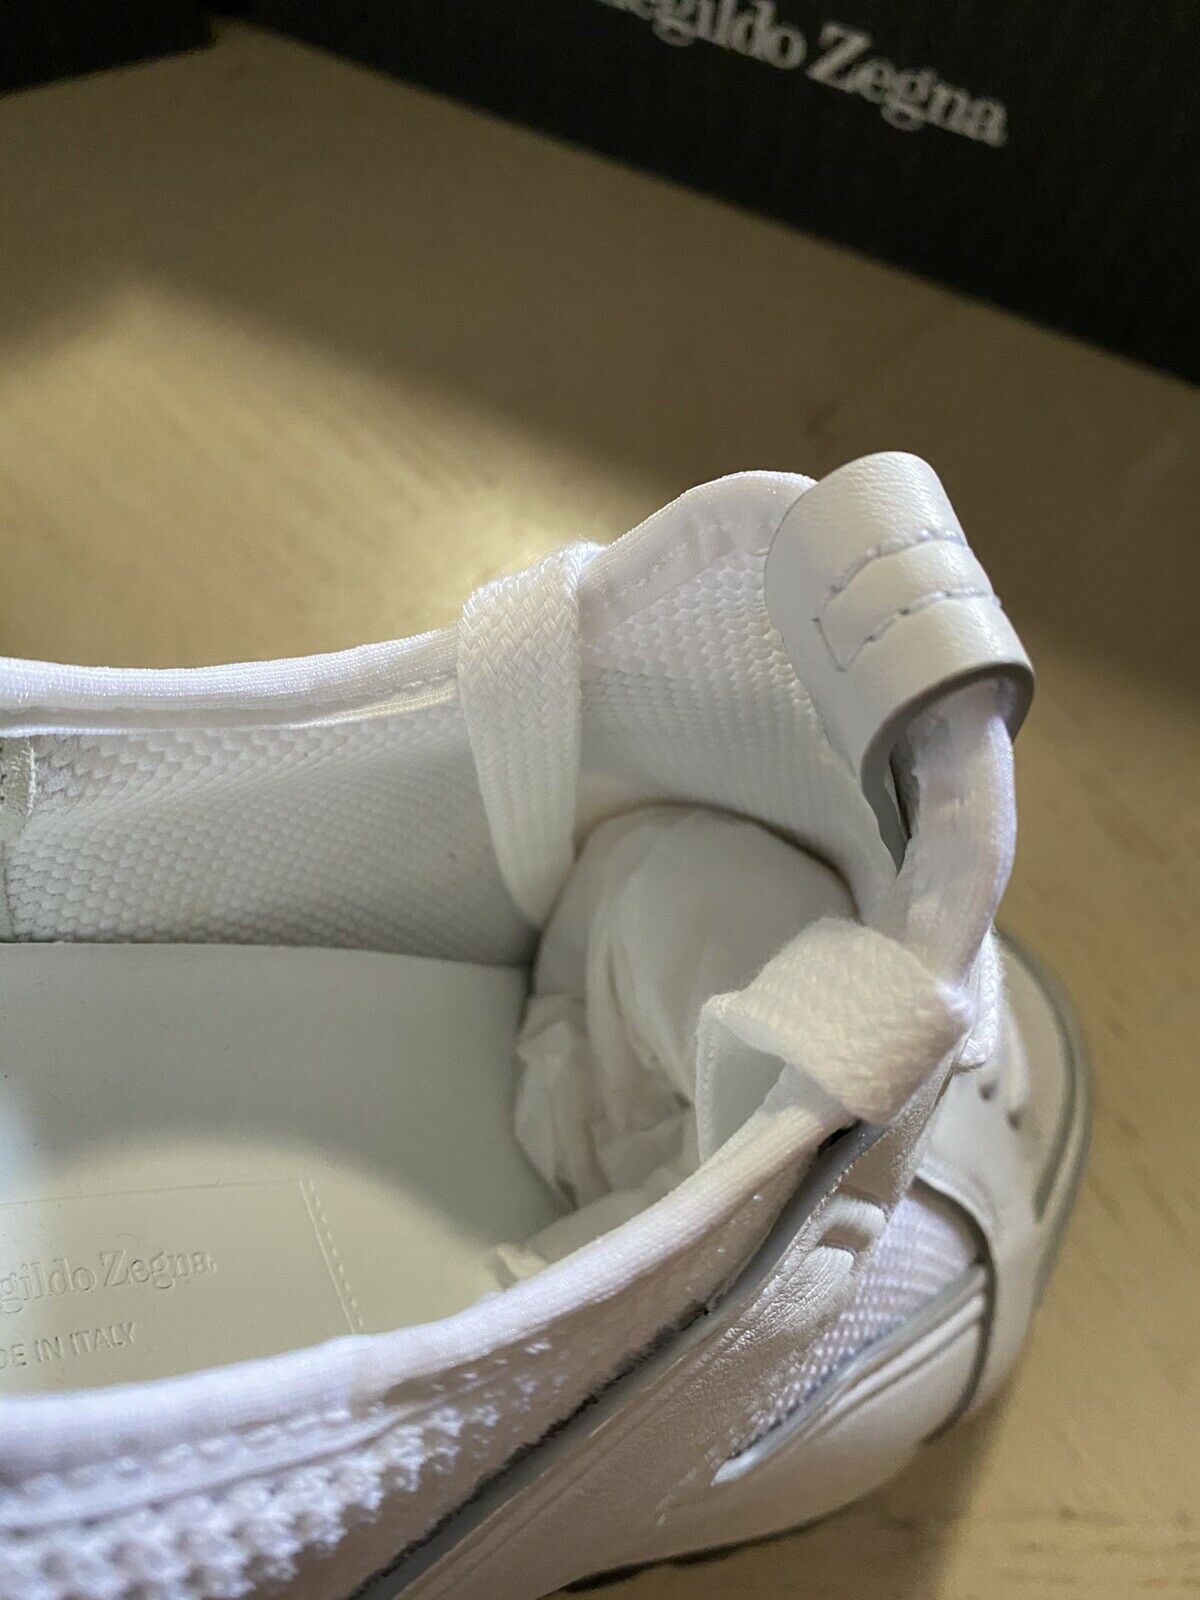 New $775 Ermenegildo Zegna Leather Sneakers Shoes White 13 US Italy